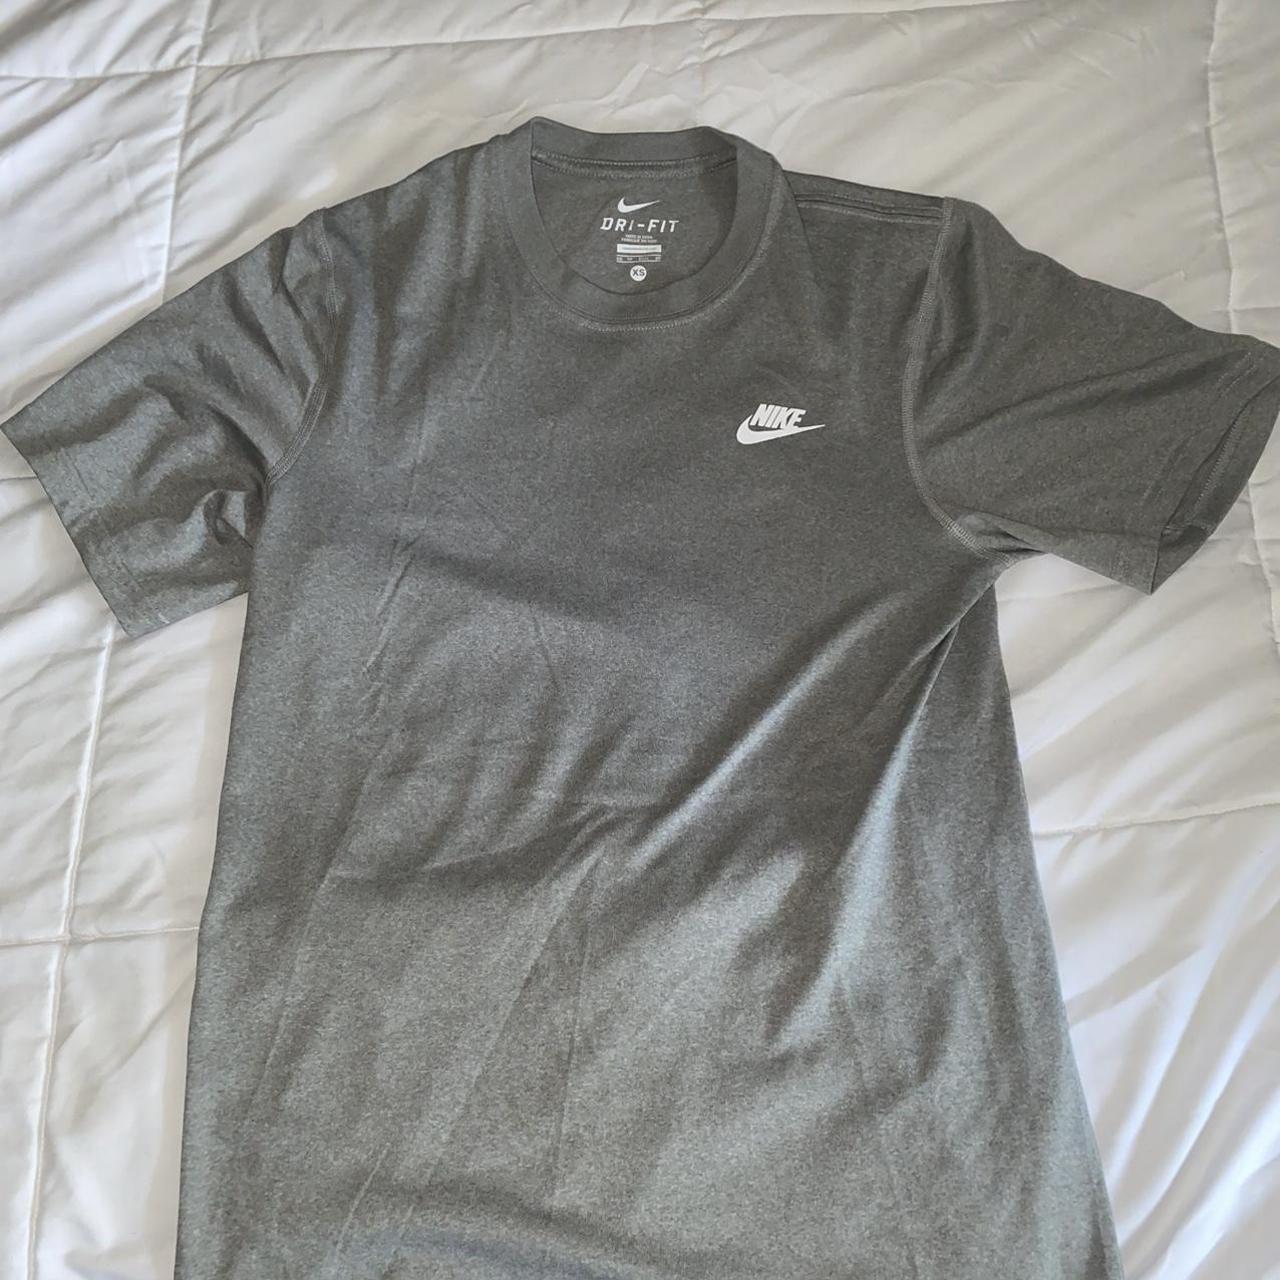 dry fit gray nike shirt - Depop